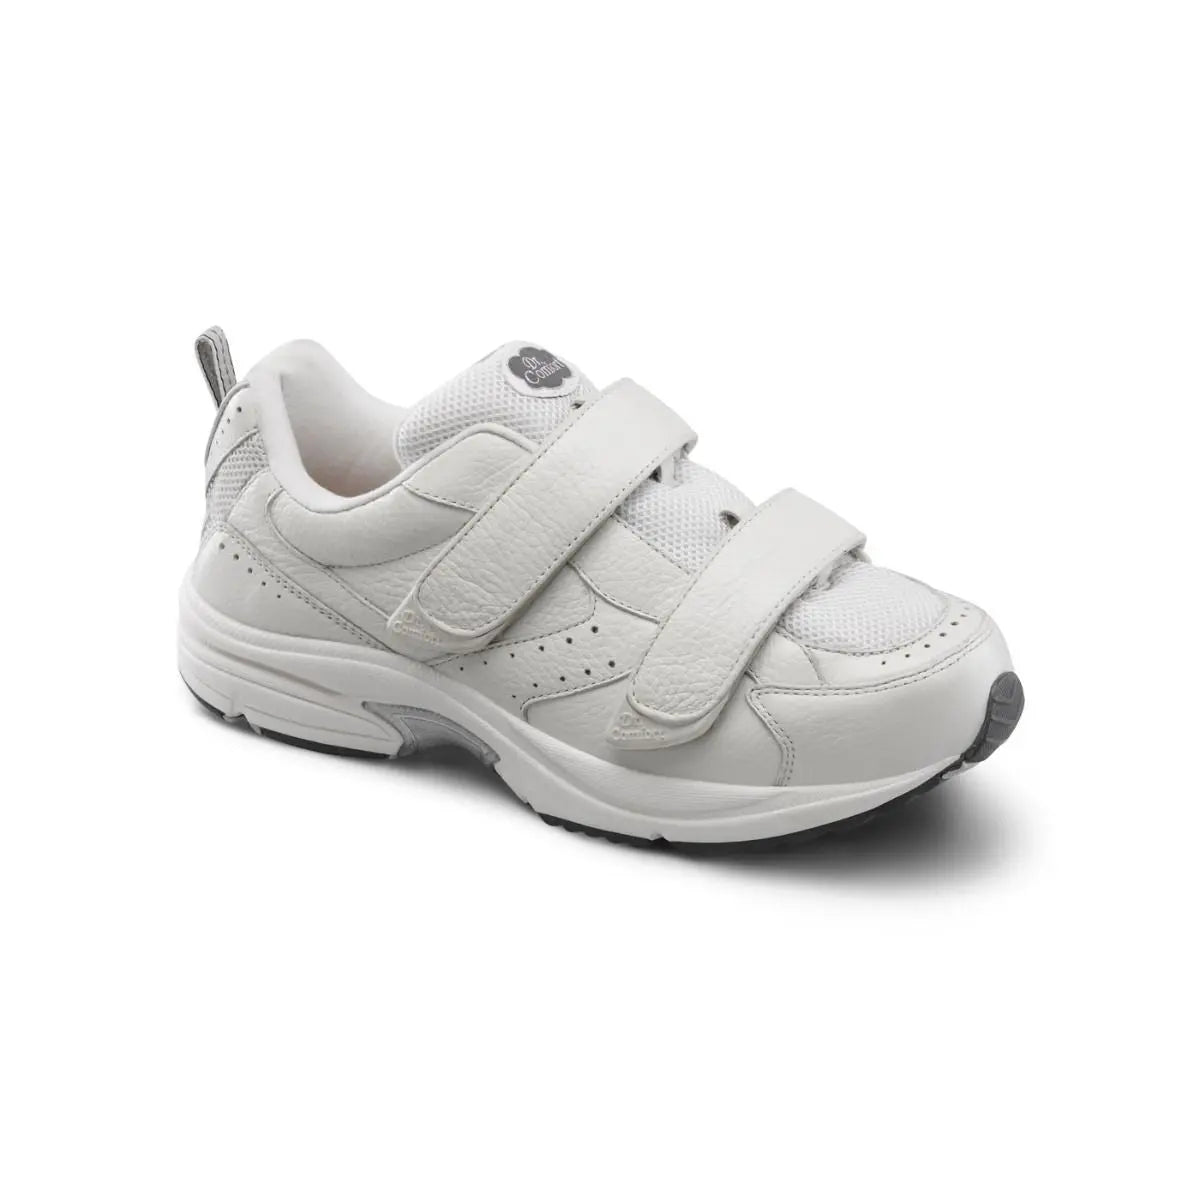 Dr. Comfort Men's Winner-X Therapeutic Double Depth Diabetic Walking Shoe, White - Main Image